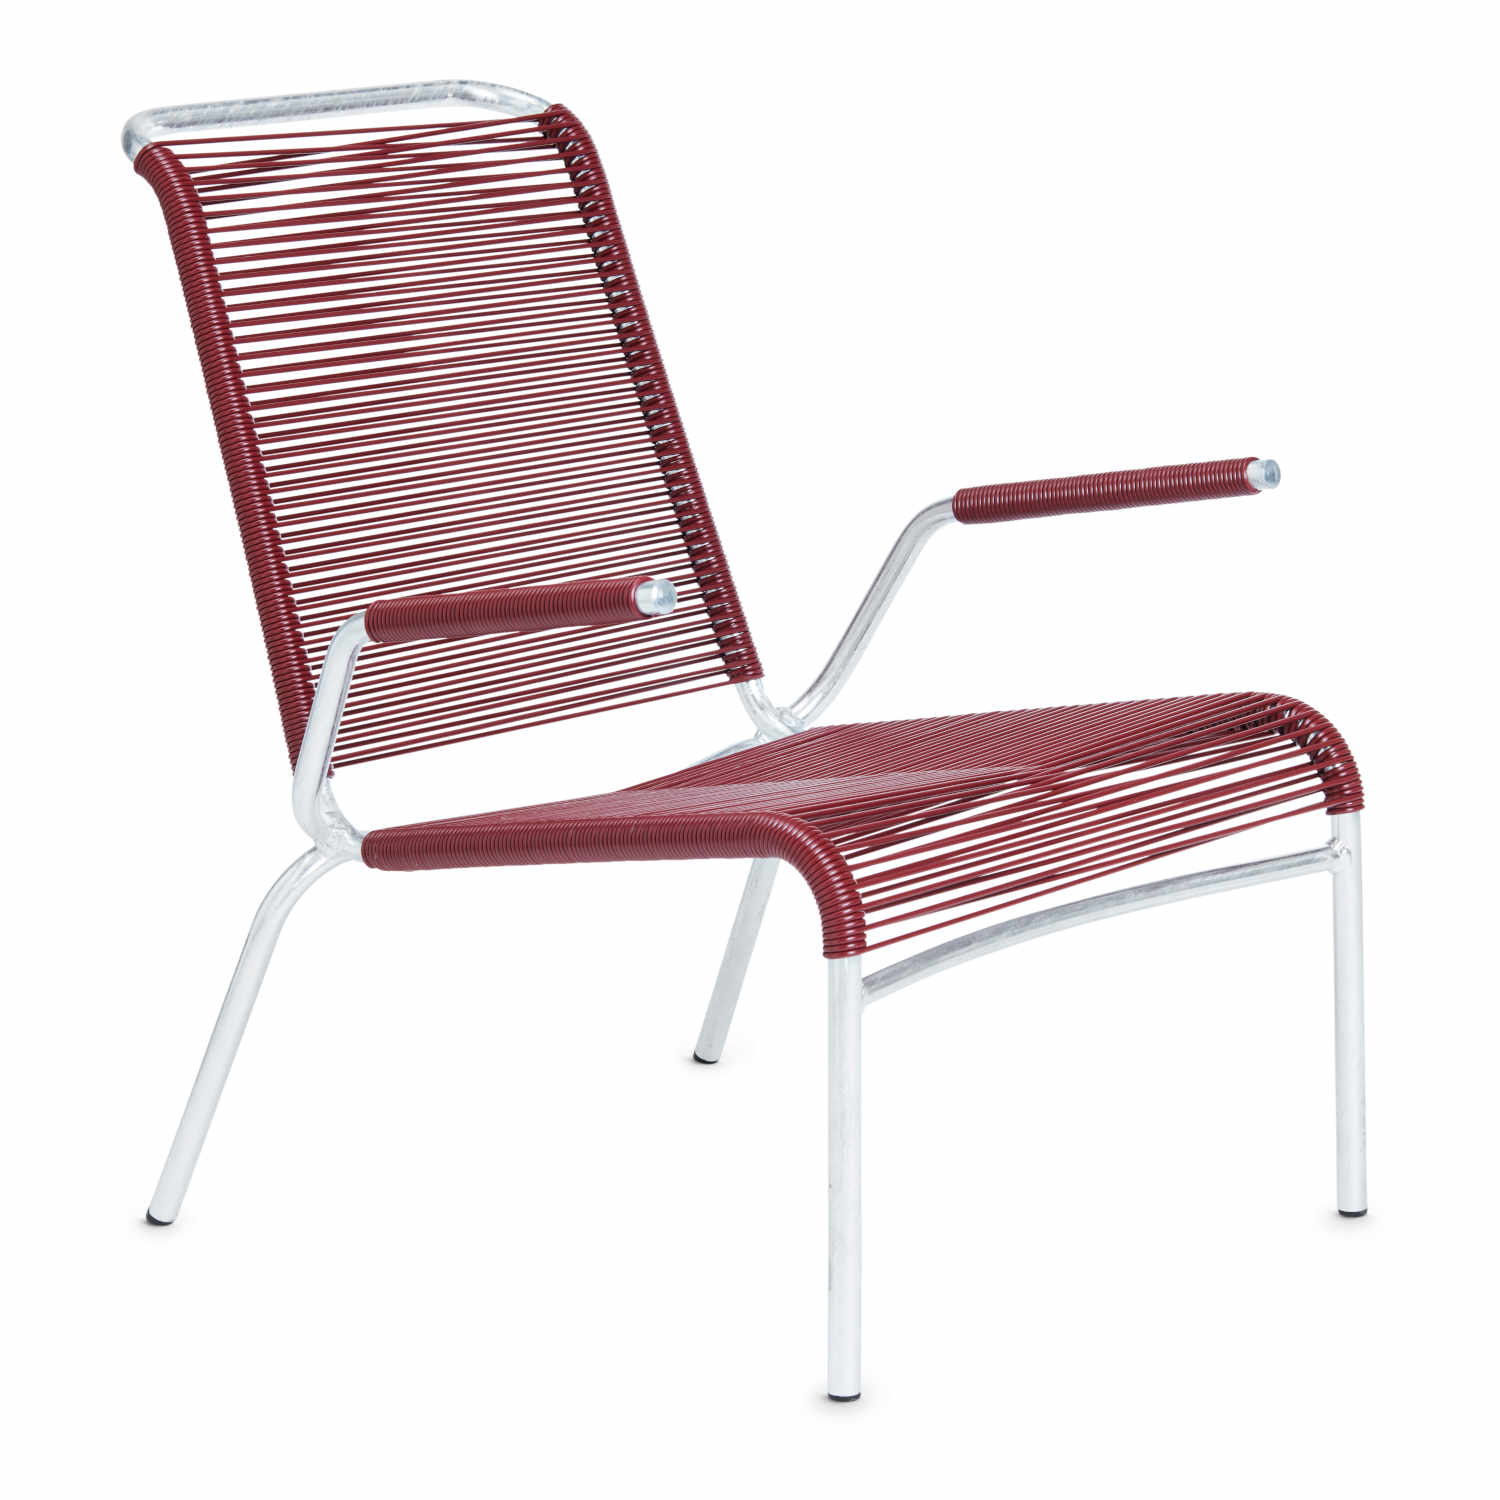 Altorfer Modell 1142 Lounge Sessel, Farbe weinrot von Embru